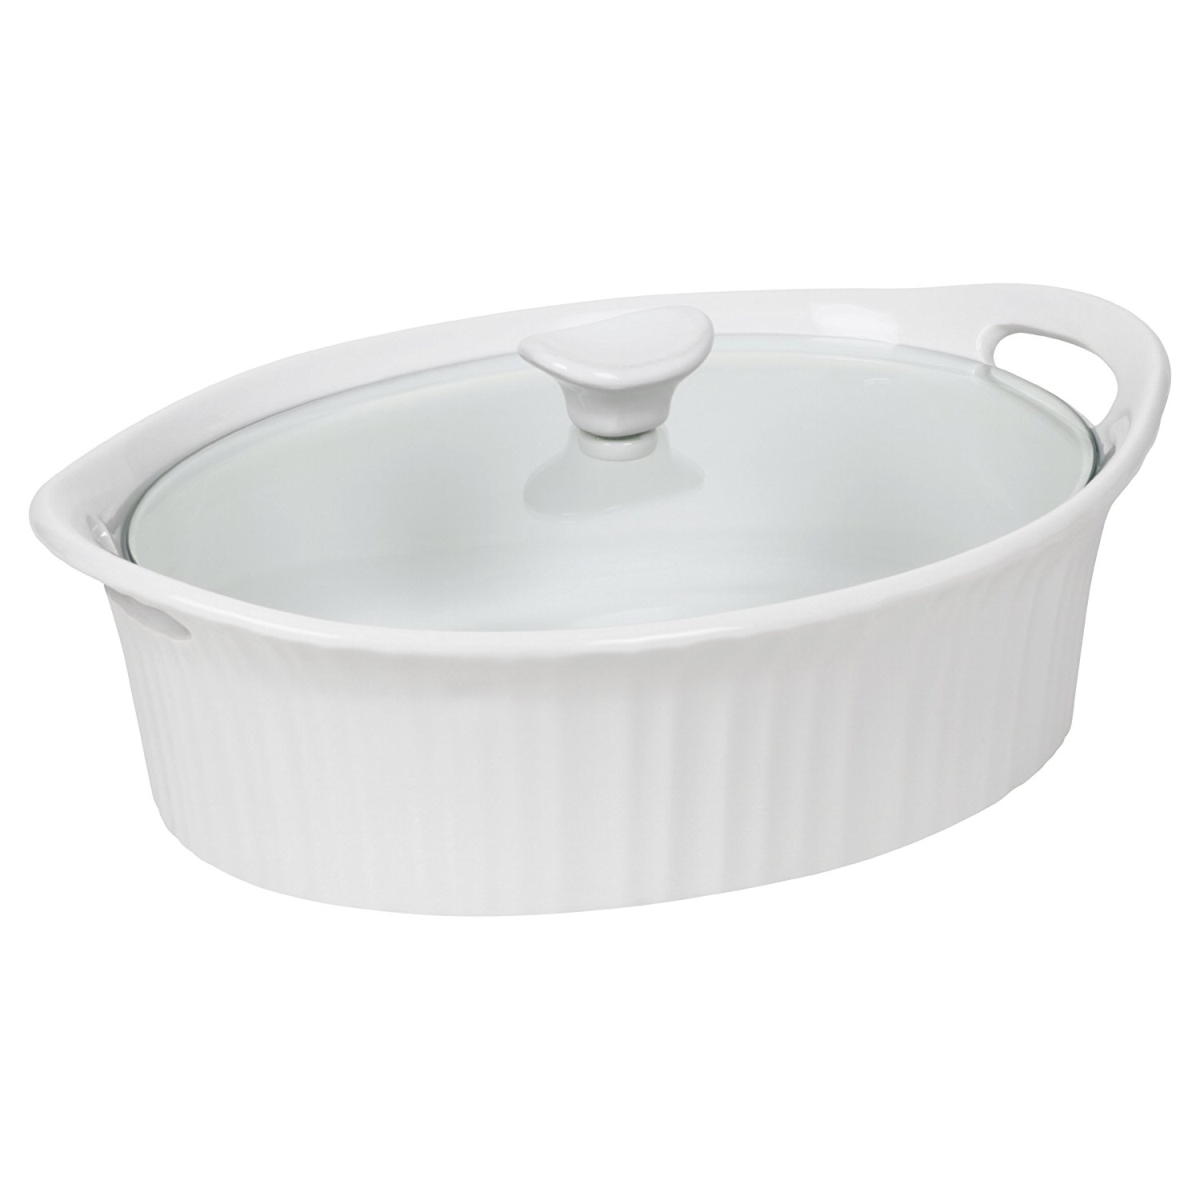 World Kitchen-corningware 1105935 2.5 Qt French White Iii Oval Casserole With Glass Cover - Medium